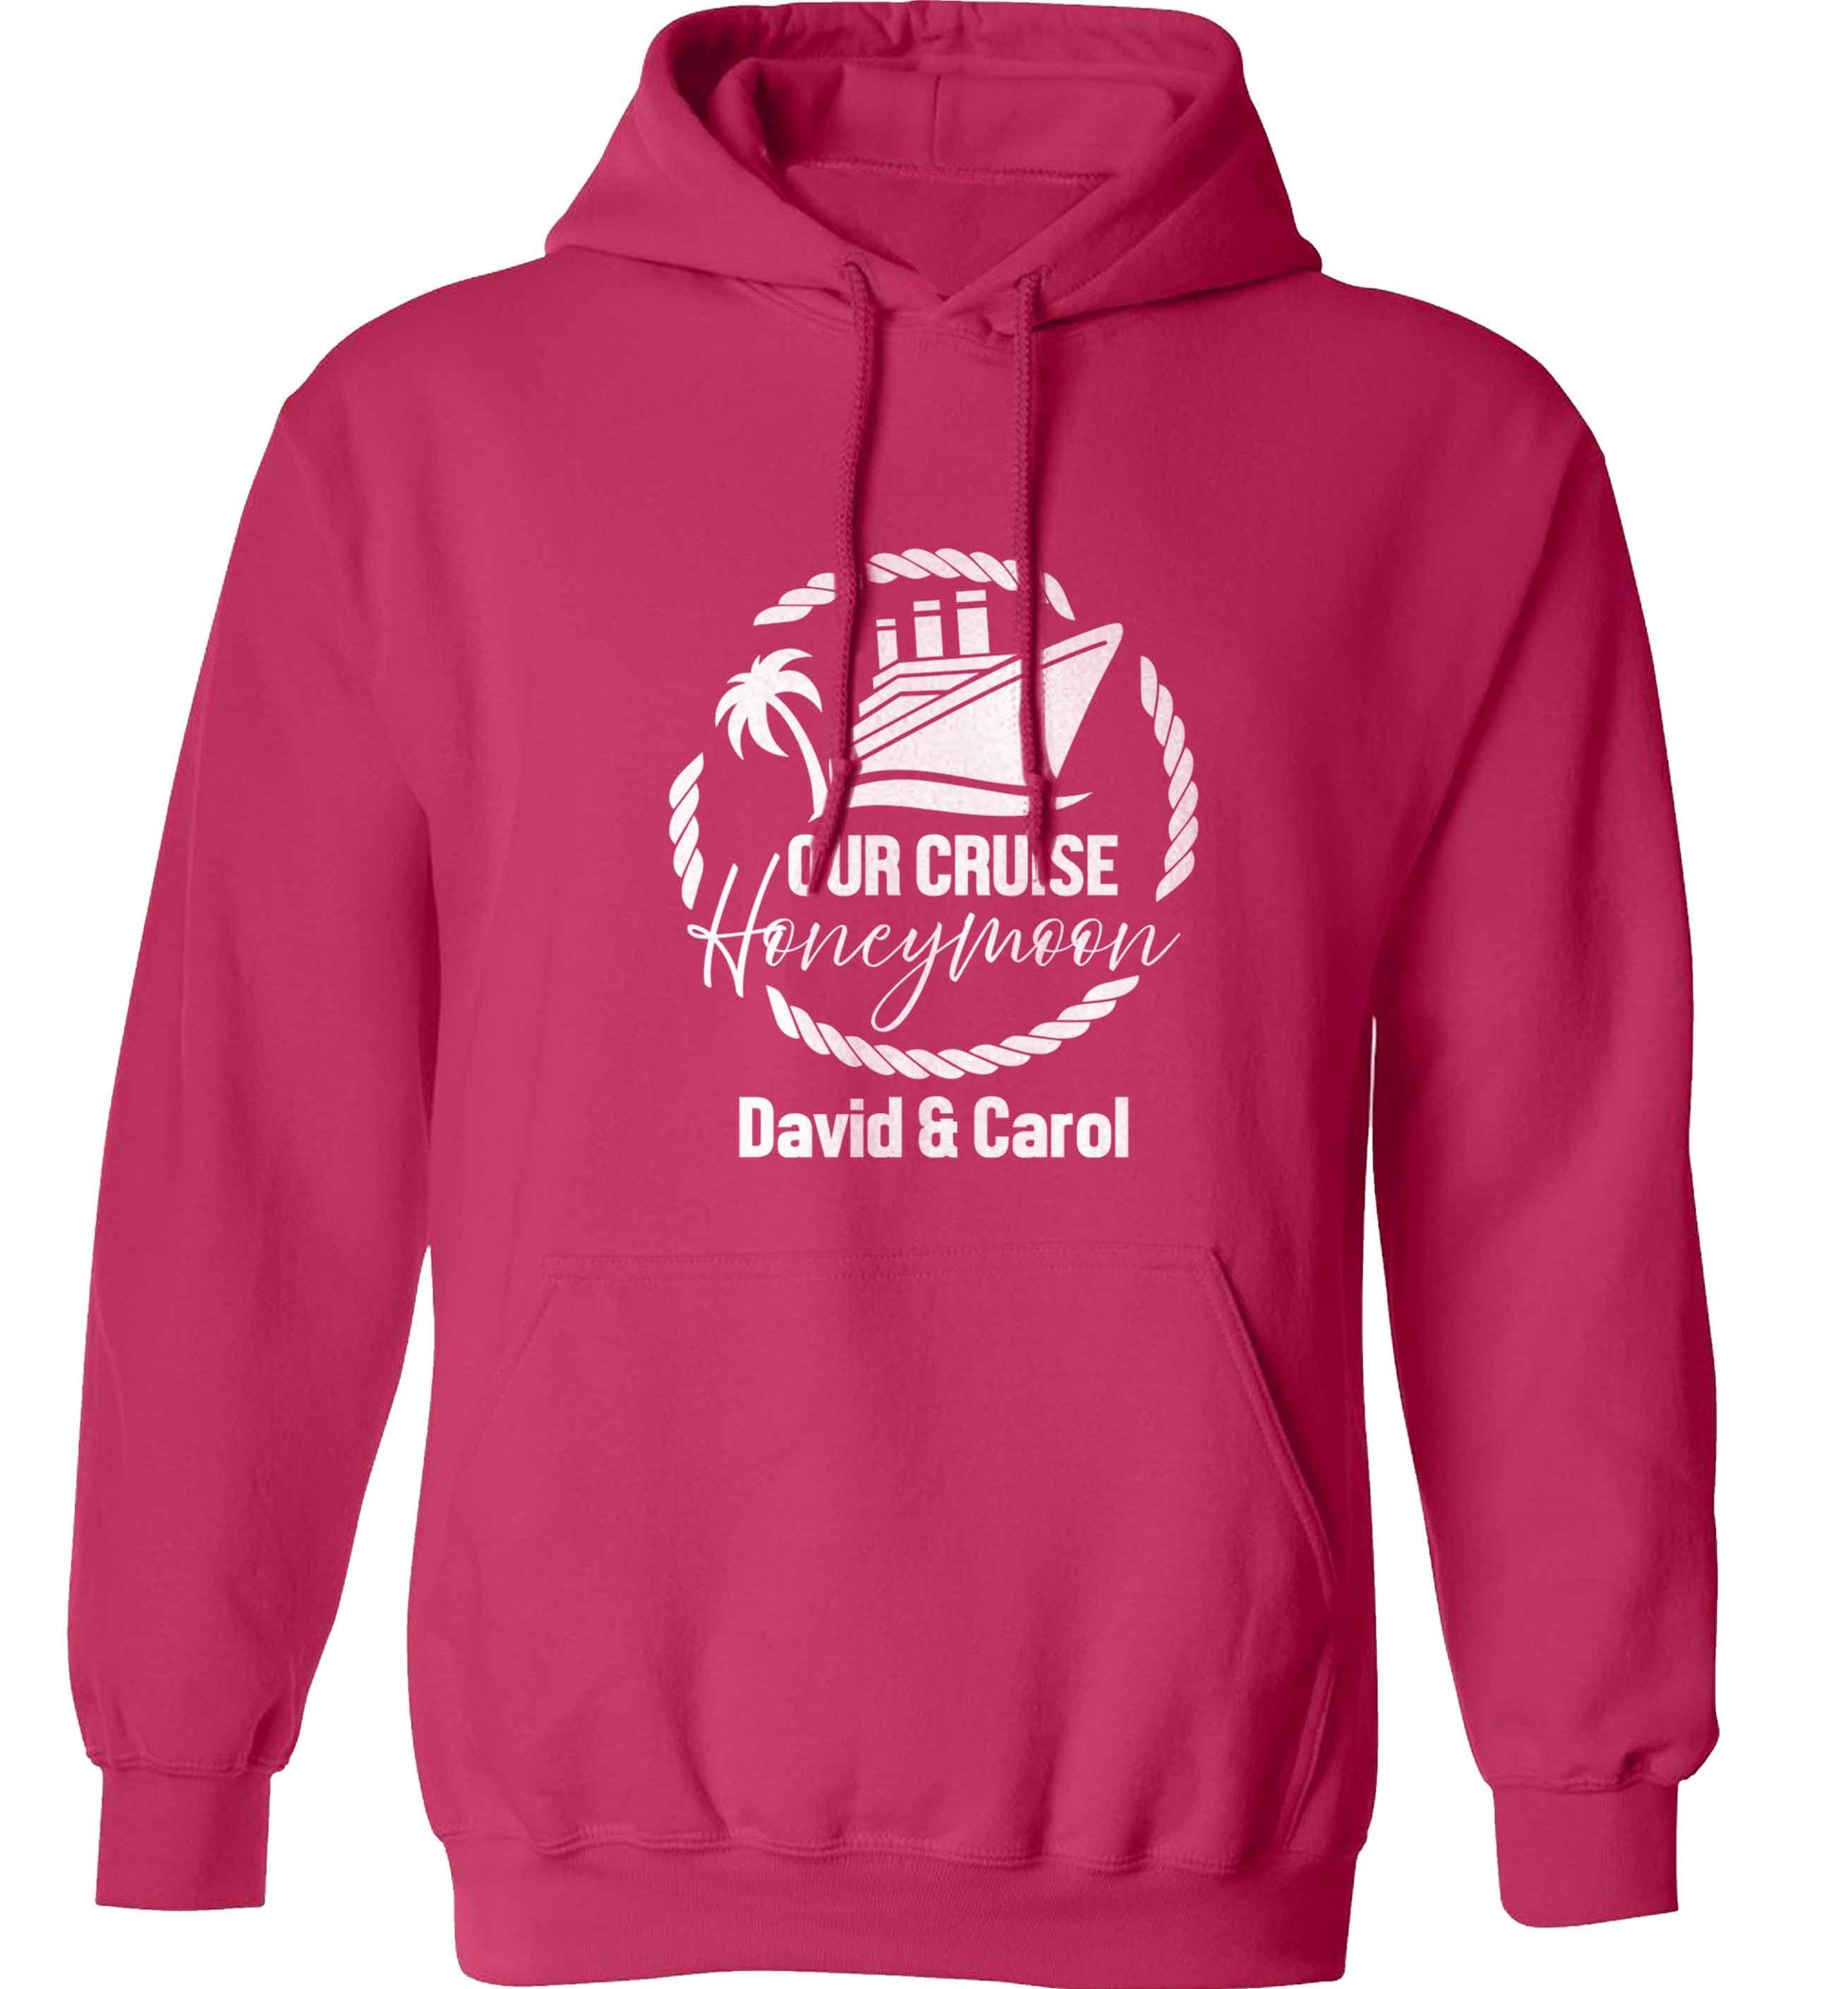 Our cruise honeymoon personalised adults unisex pink hoodie 2XL